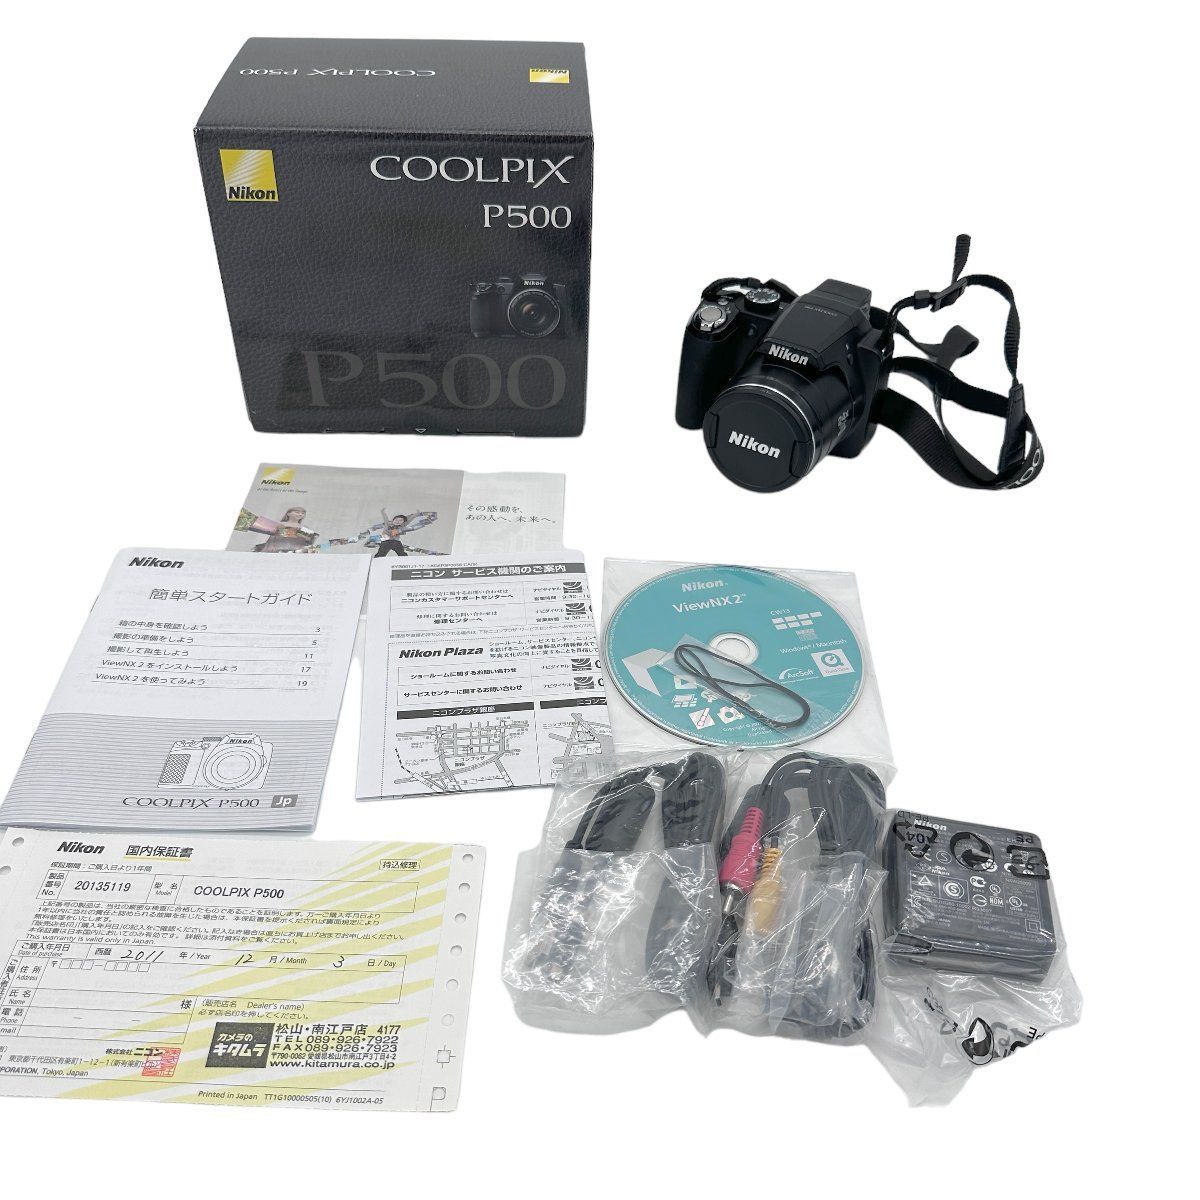 NikonデジタルカメラCOOLPIX P500 ブラック P500 1210万画素 裏面照射CMOS 広角22.5mm 光学36倍 3型チルト式液晶